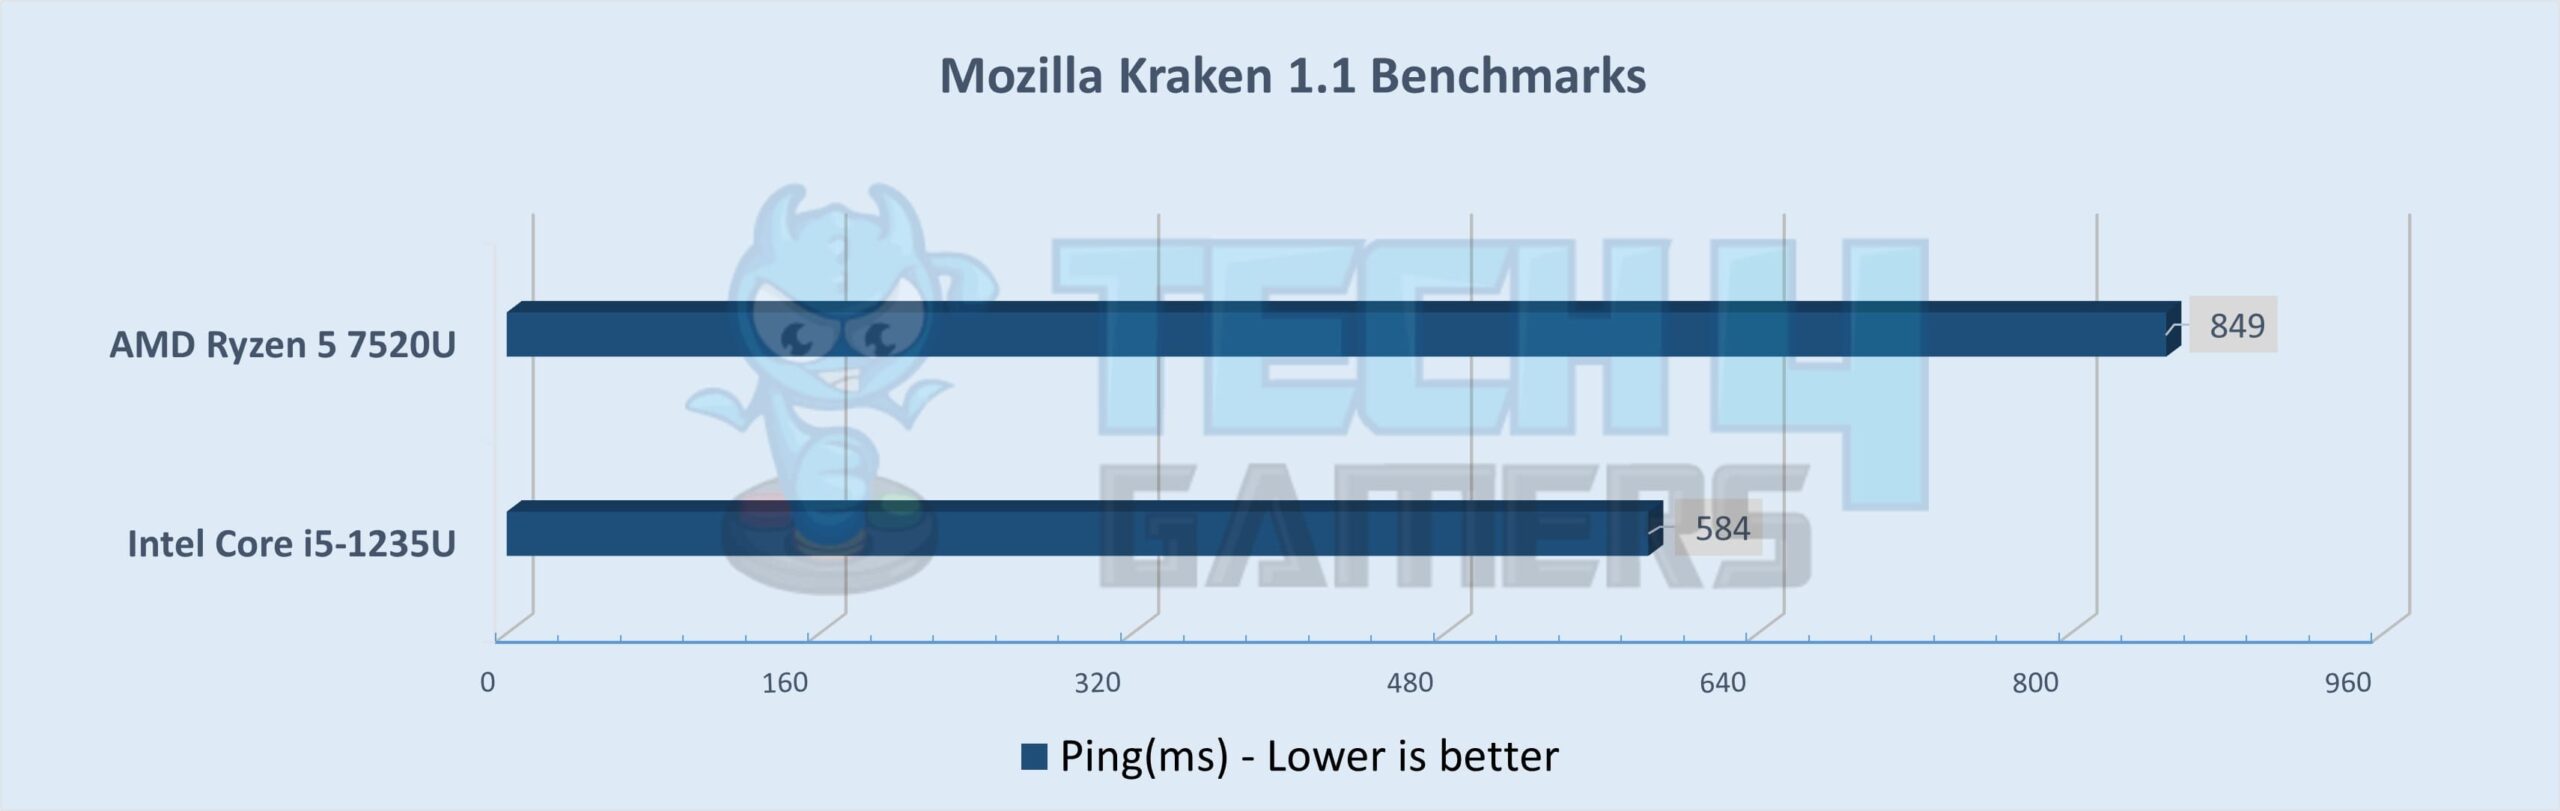 Mozilla Kraken 1.1 Benchmarks